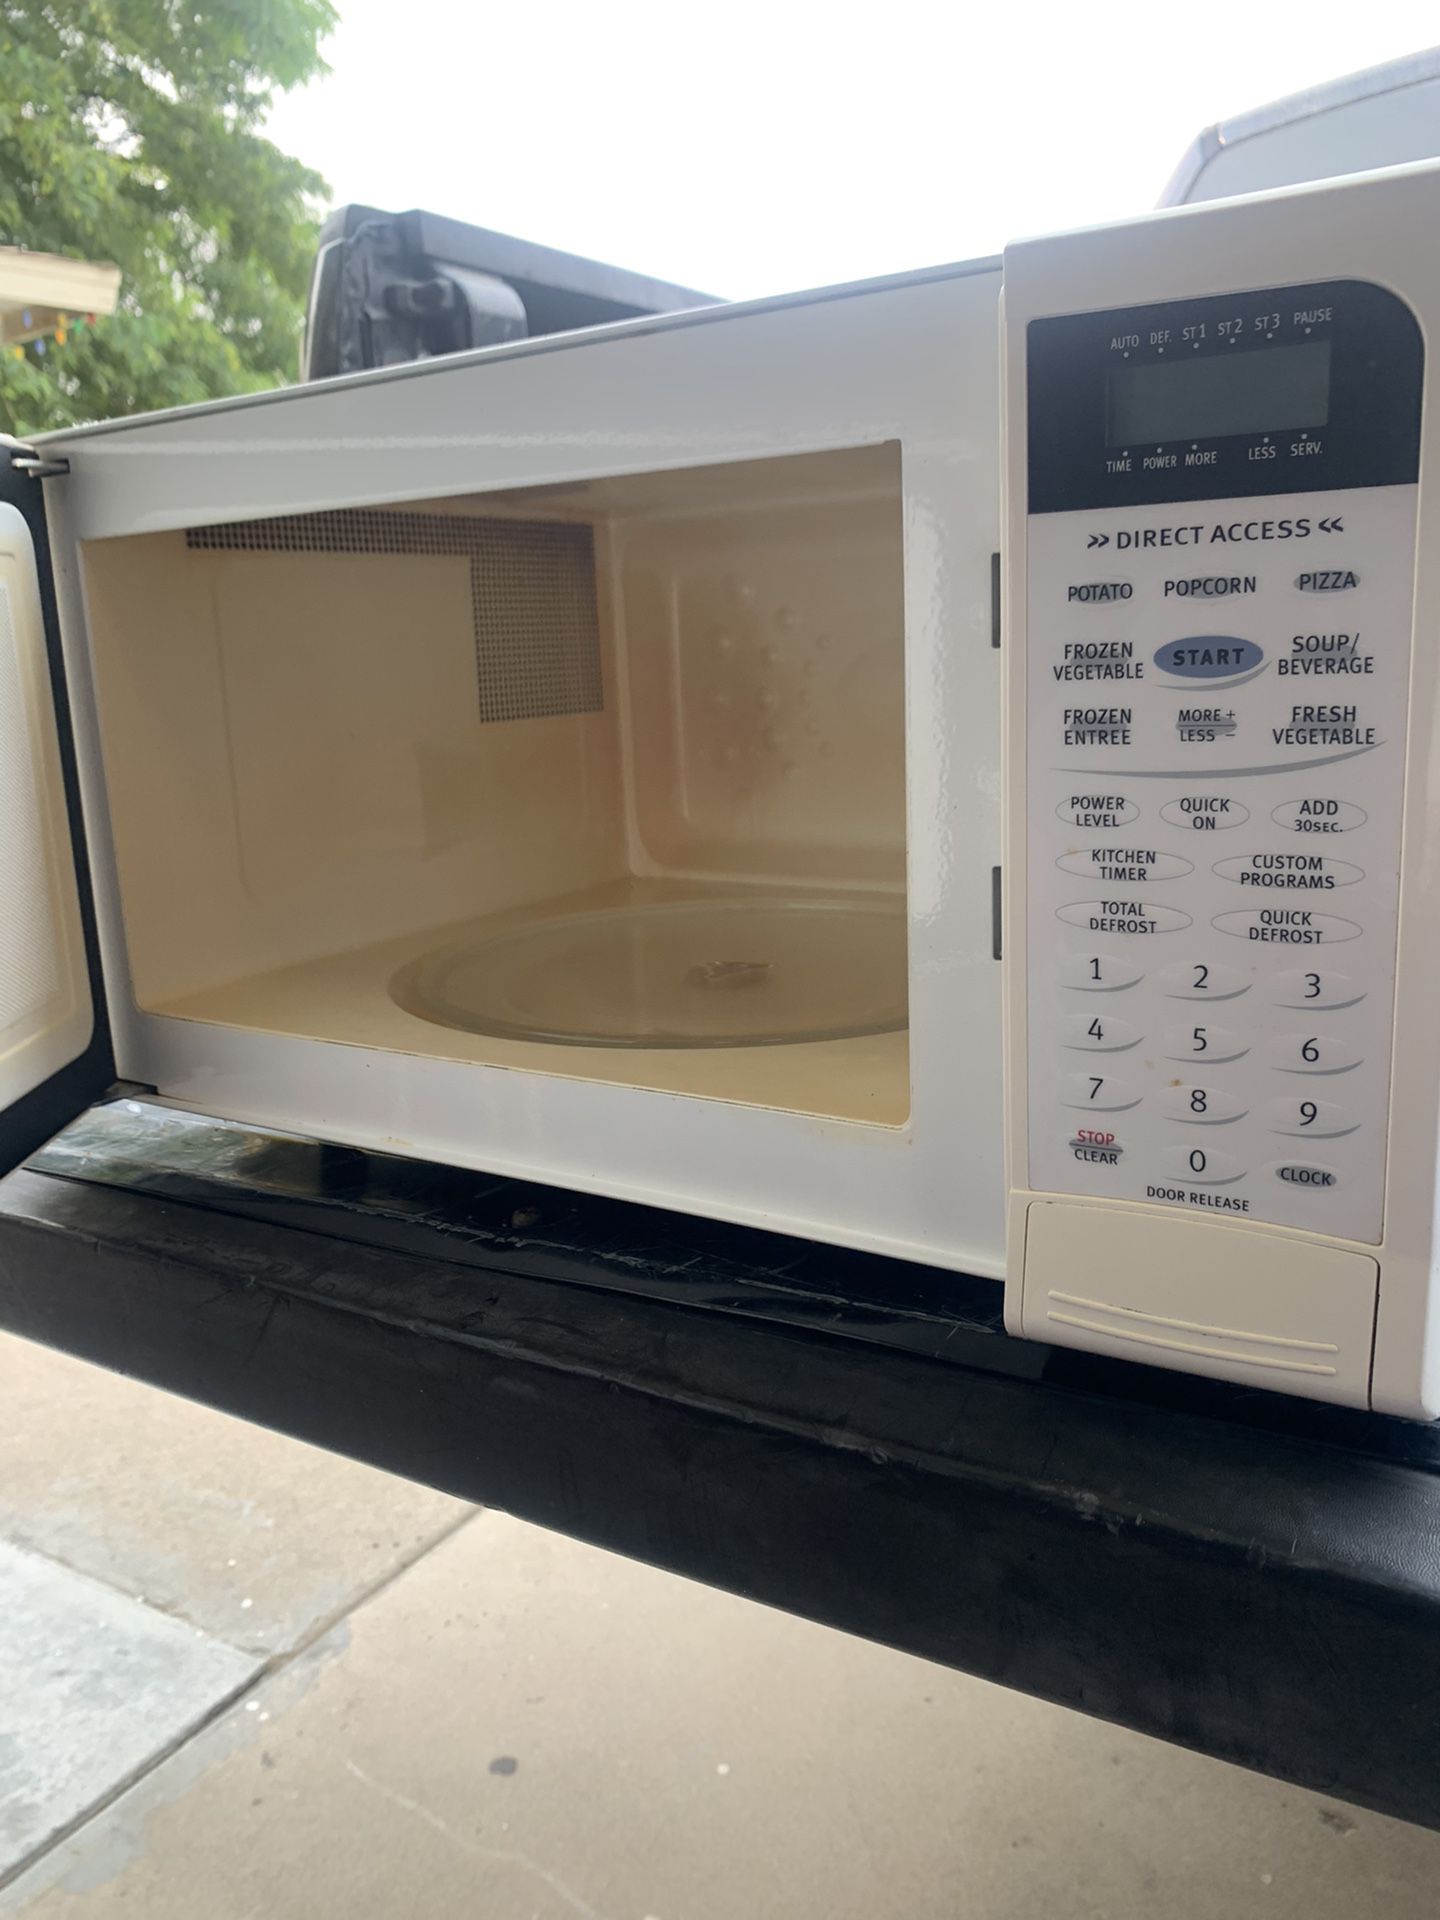 Sanyo microwave super showerwave for Sale in Riverside, CA - OfferUp